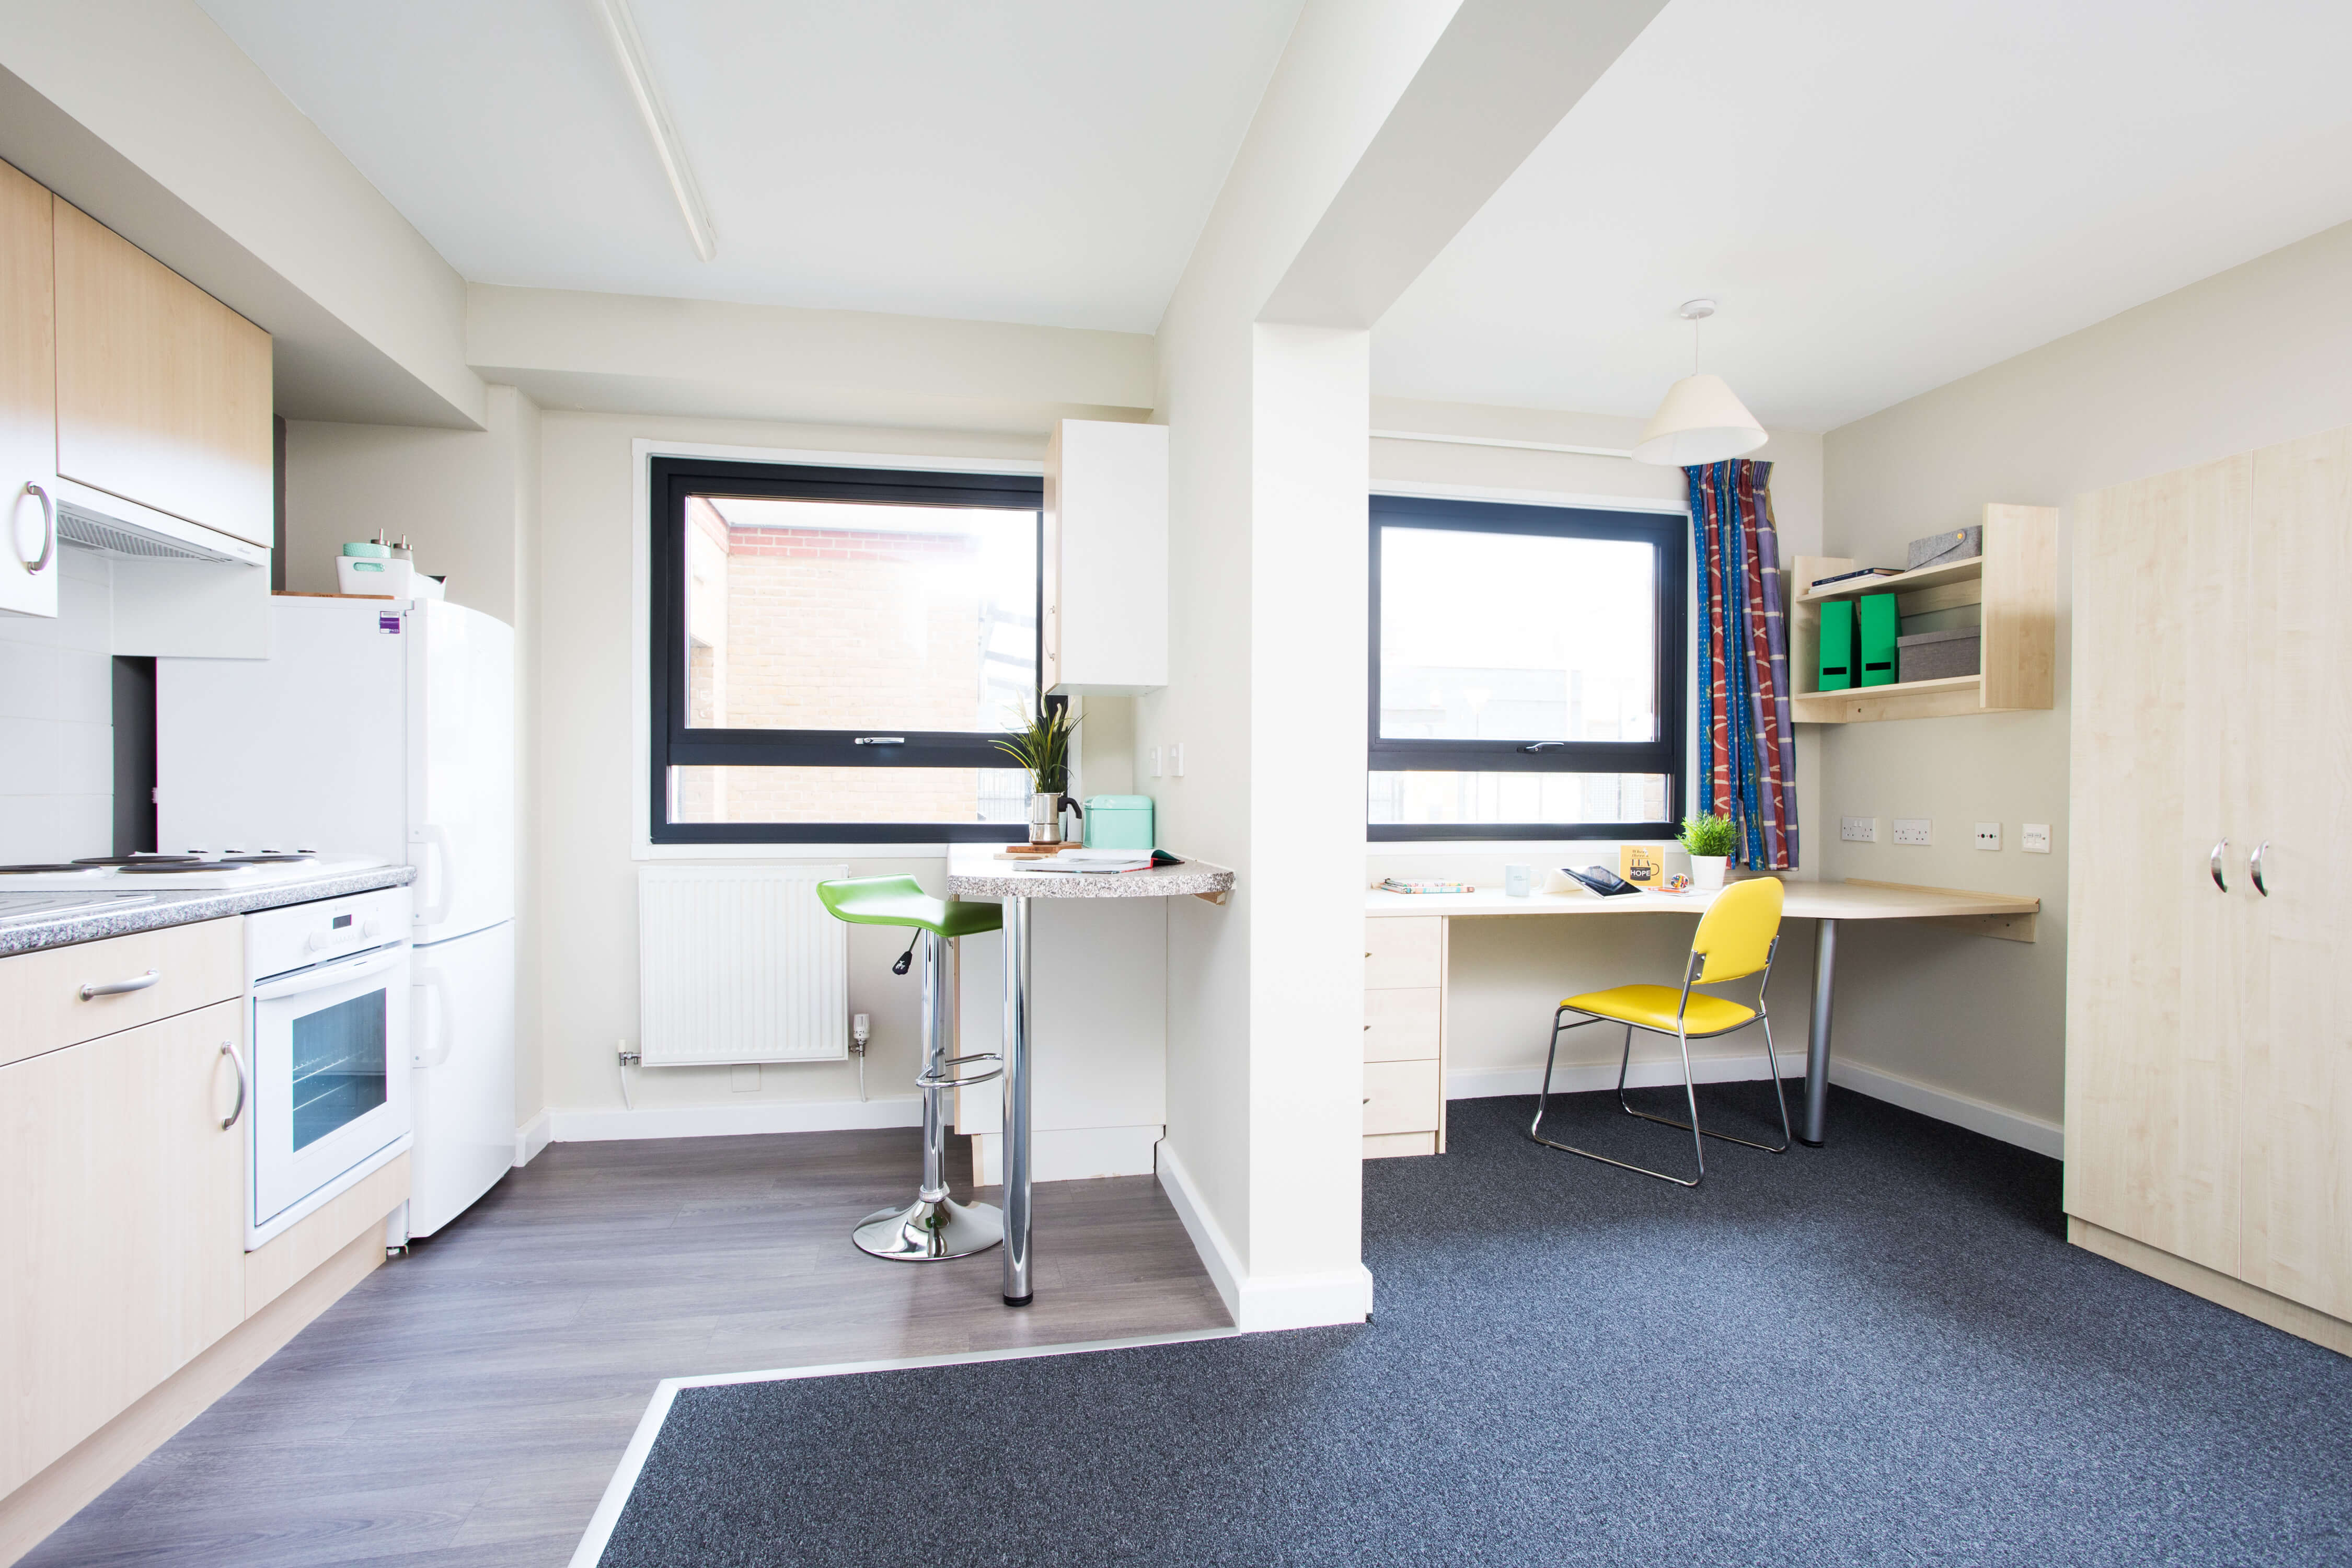 Studio kitchen and study space